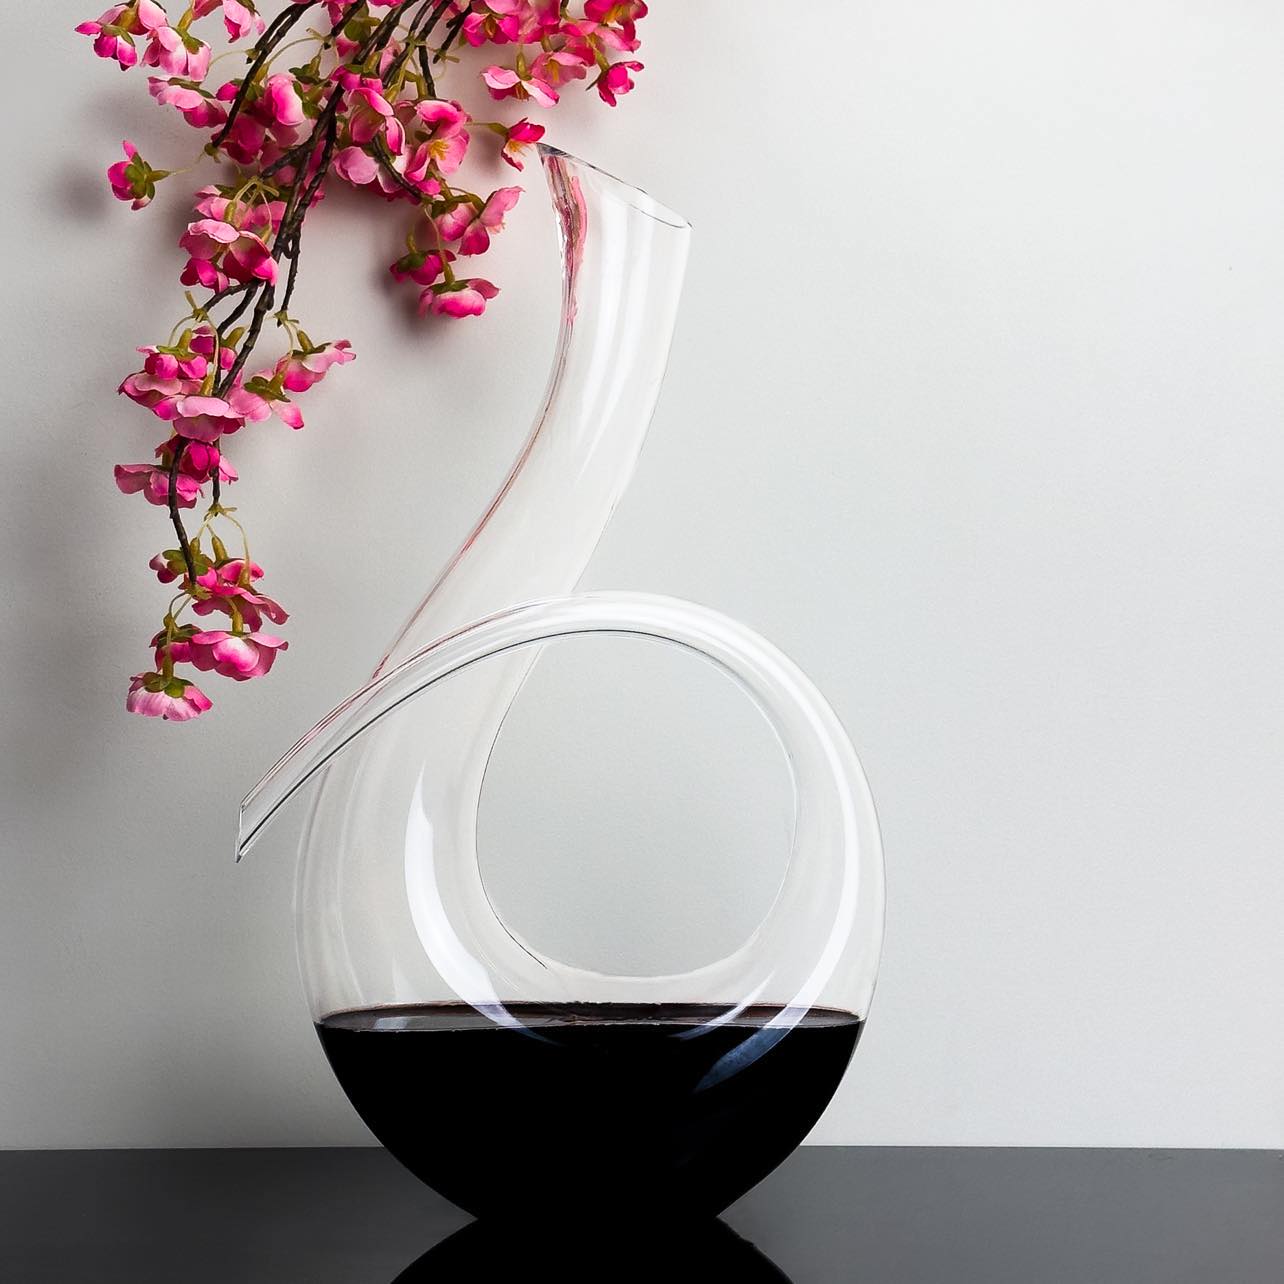 The Airlie Glass Wine Decanter - Solkatt Designs 